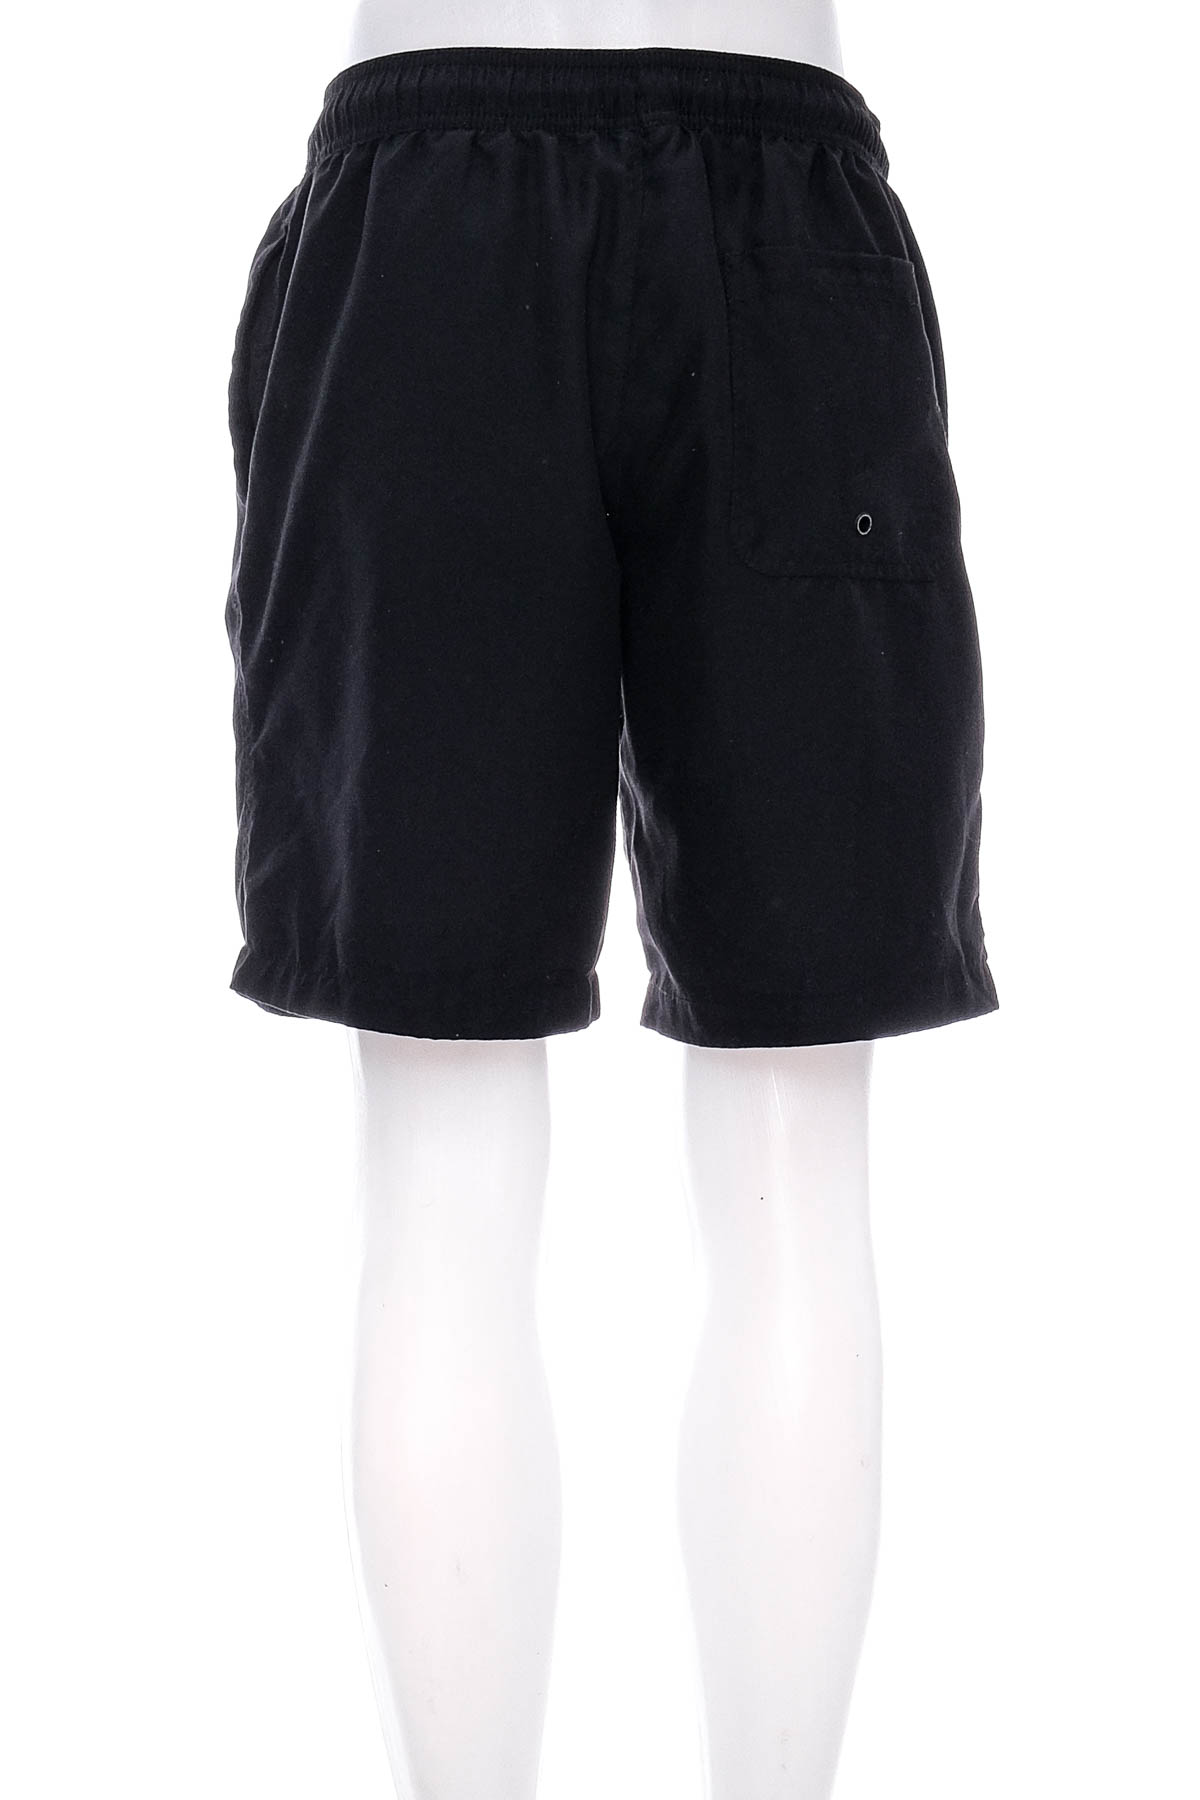 Men's shorts - Amazon essentials - 1